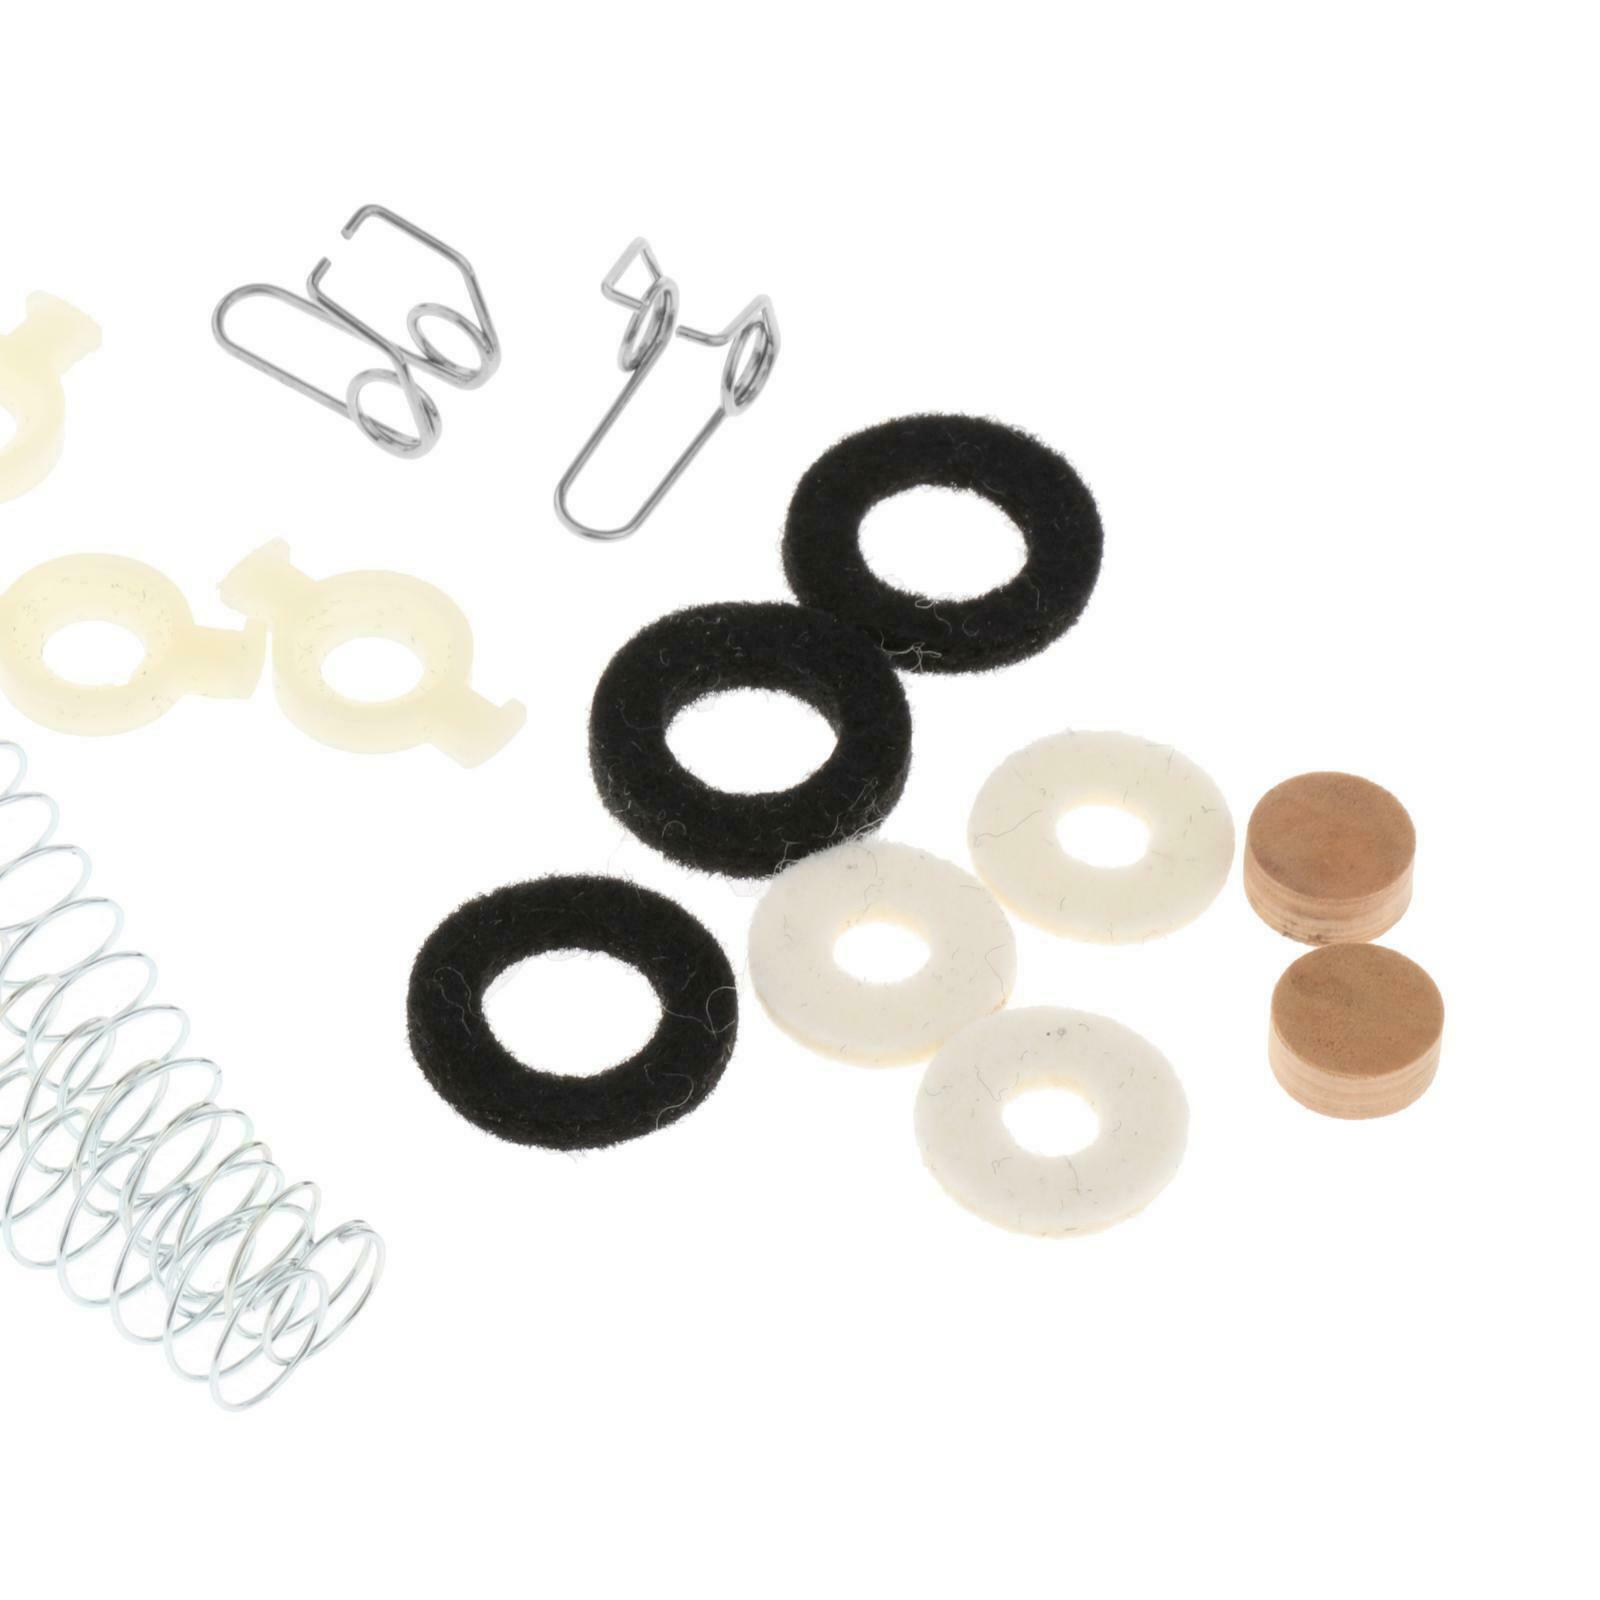 16pcs Trumpet Piston Valve Repair Kit with Spring Replacement Accessories